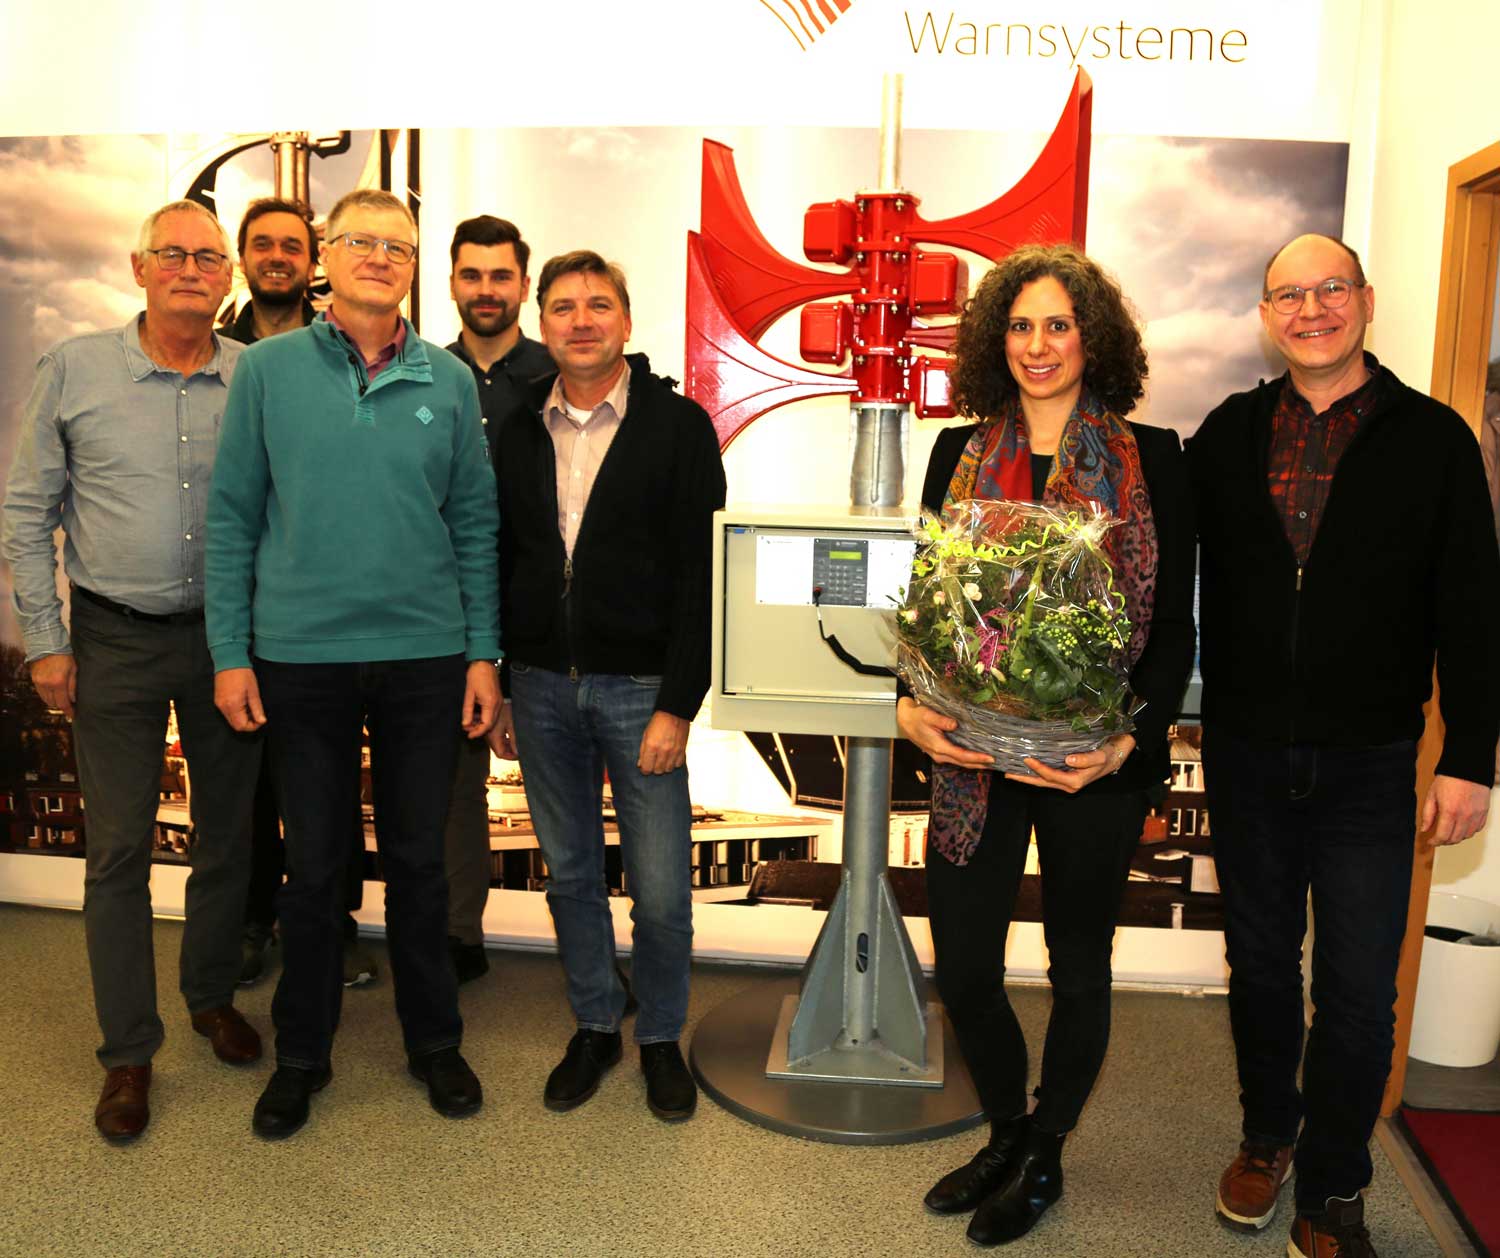 The mayor of Zwönitz congratulates HÖRMANN Warnsysteme to our 10th anniversary